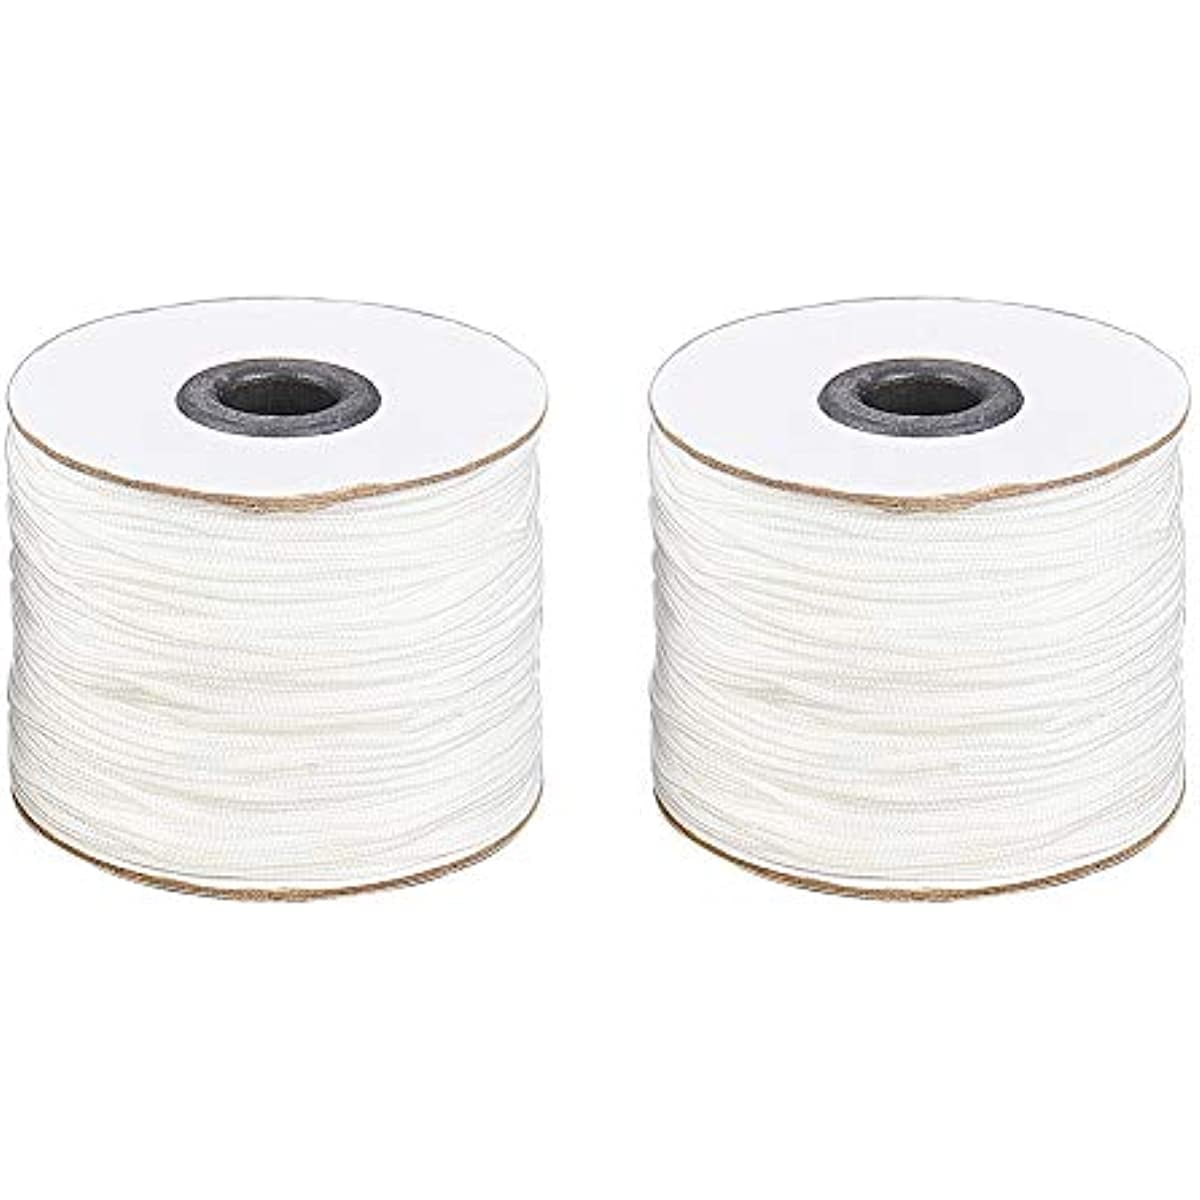 arricraft 2 Rolls Braided Nylon Cord, 3mm Nylon Thread String Black White  Waxed Cord Thread DIY Craft Lift Shade Cord for Sewing Braided Jewelry